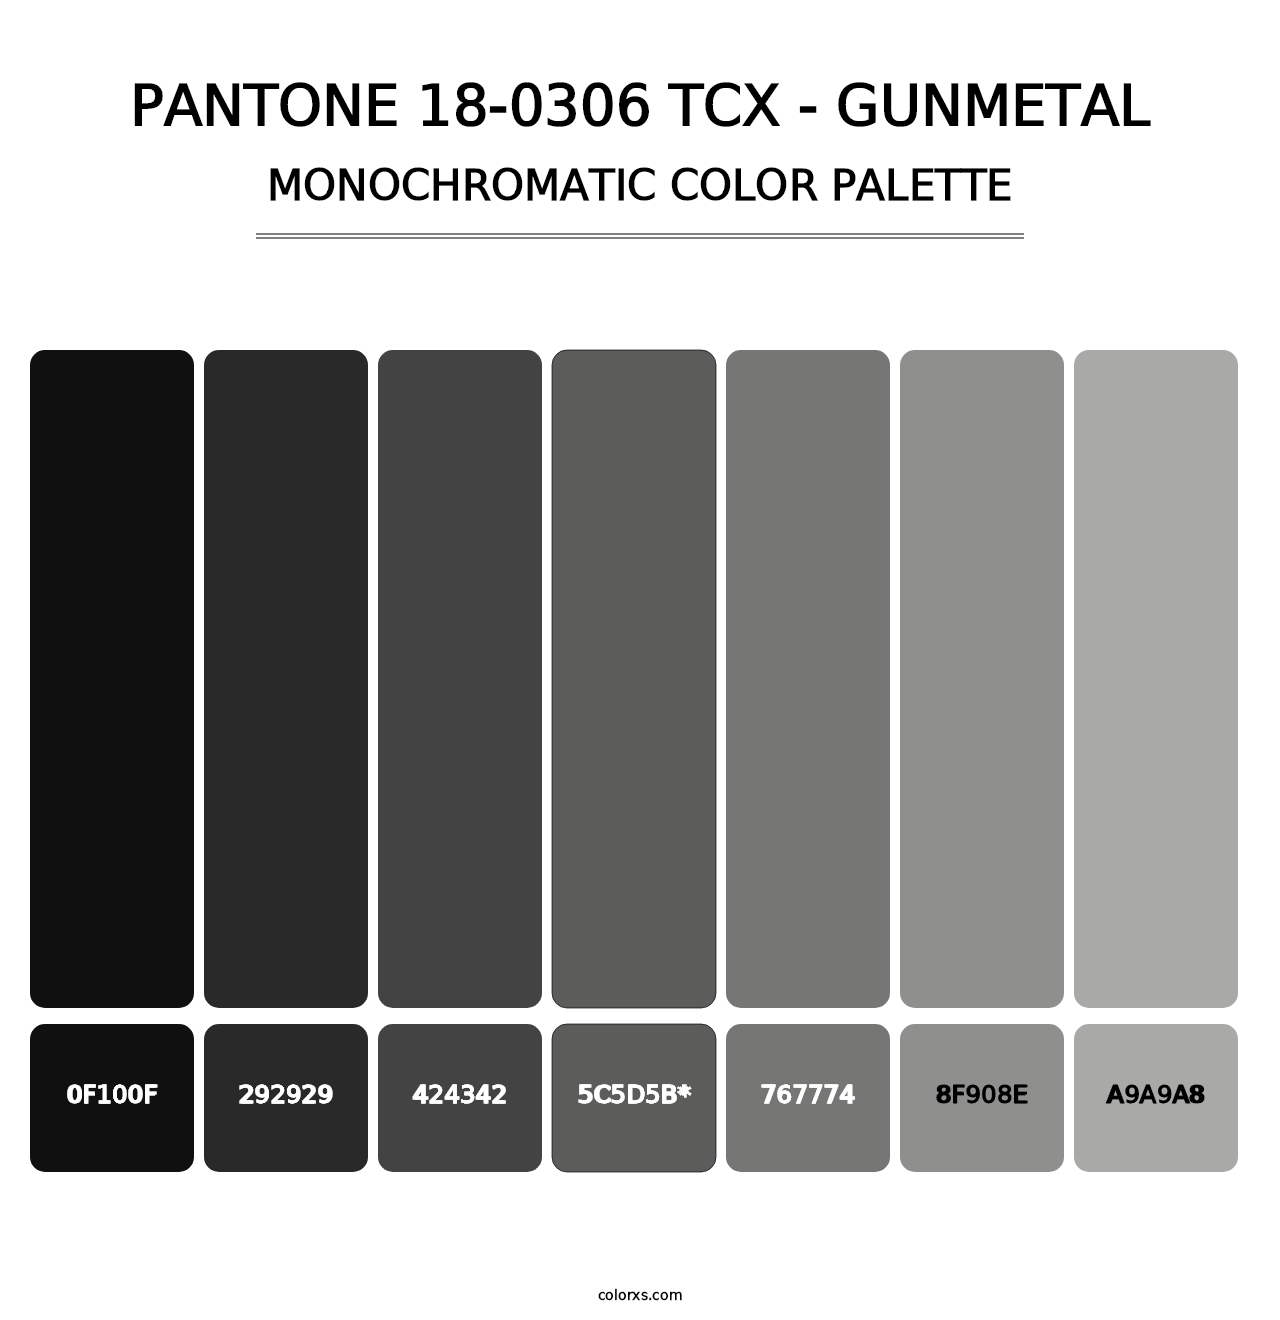 PANTONE 18-0306 TCX - Gunmetal - Monochromatic Color Palette